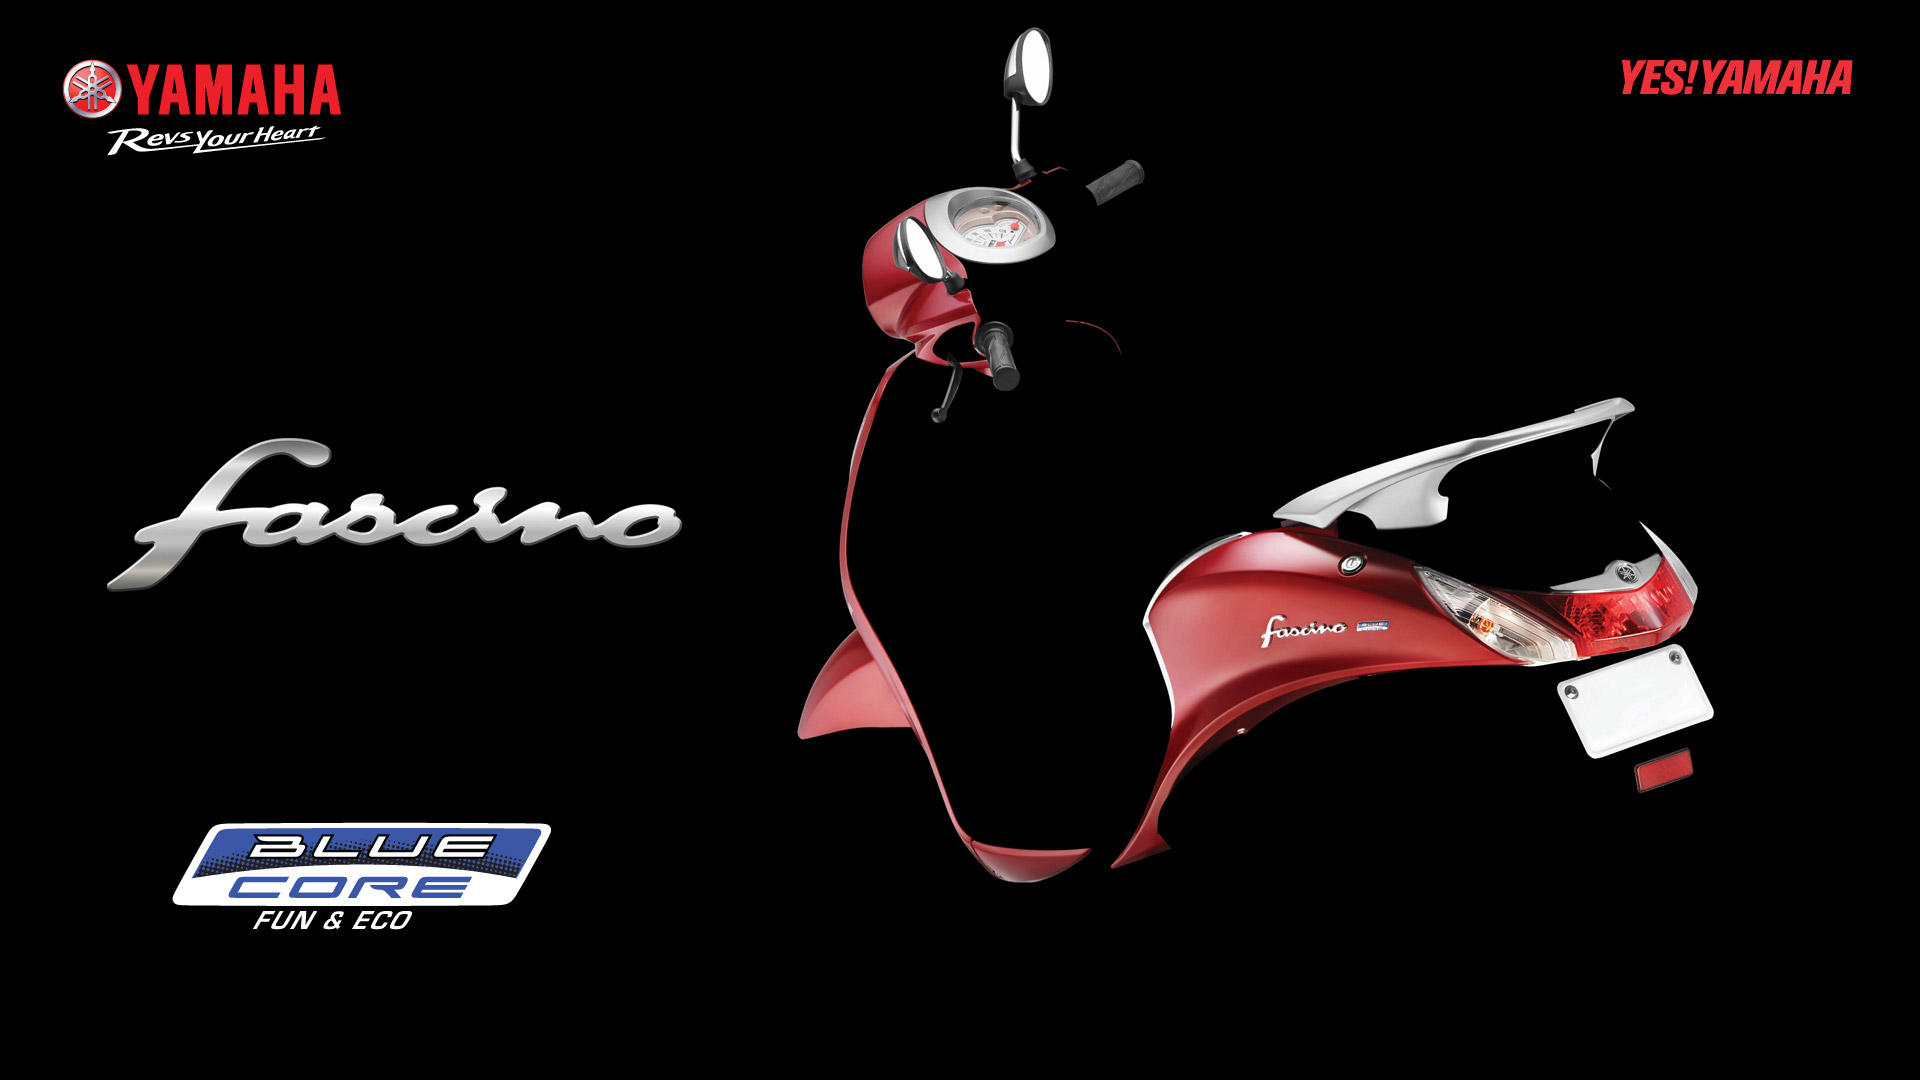 Official Wallpaper of Yamaha Fascino